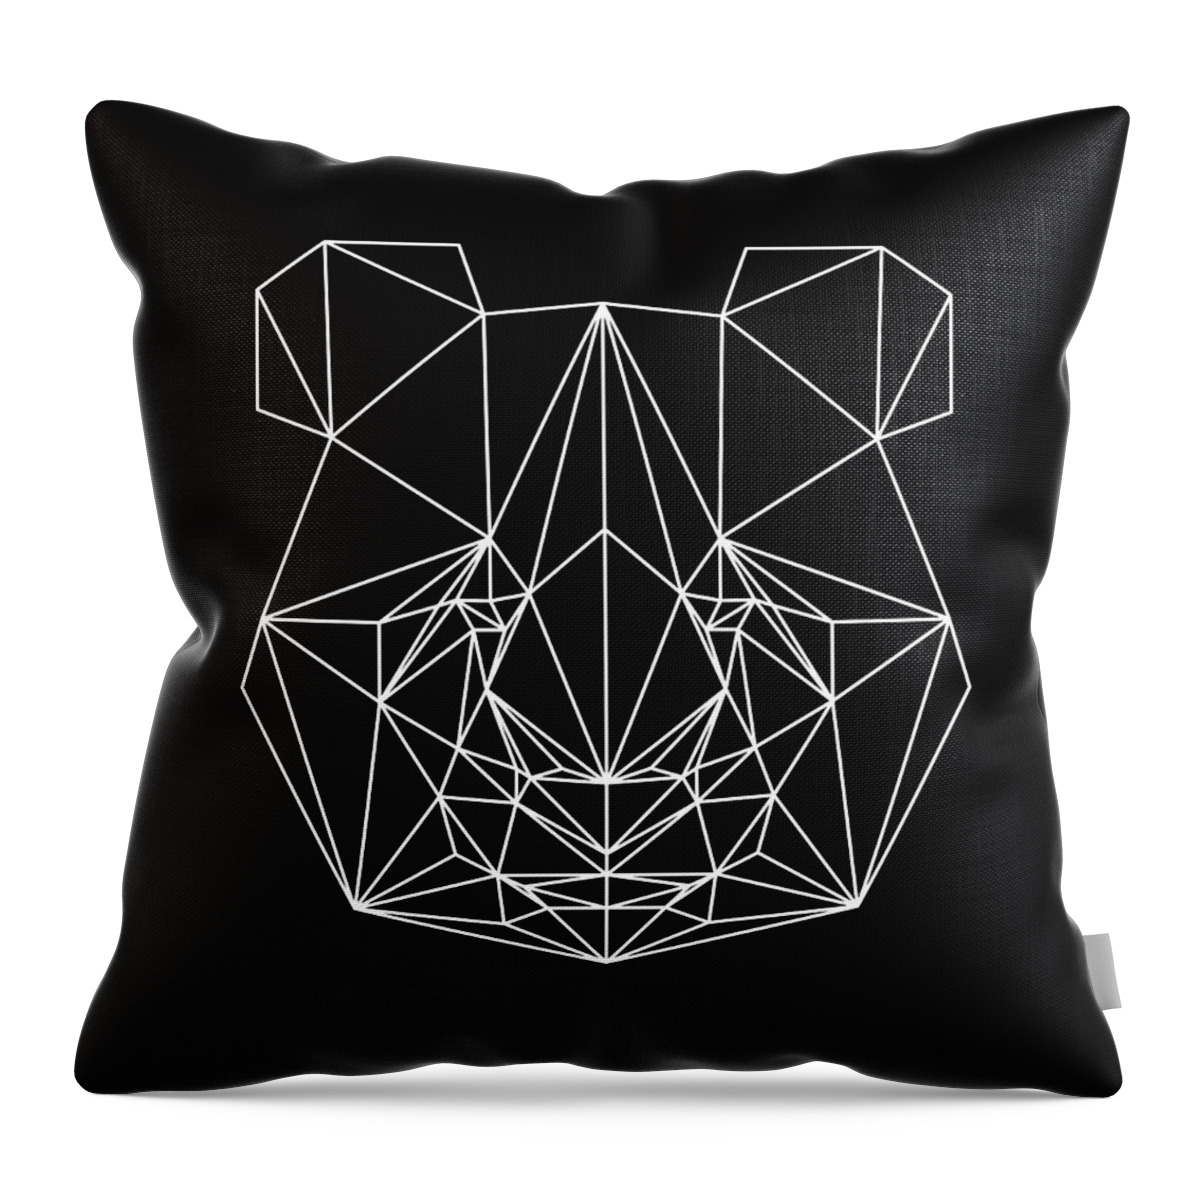 Panda Throw Pillow featuring the digital art Night Panda by Naxart Studio